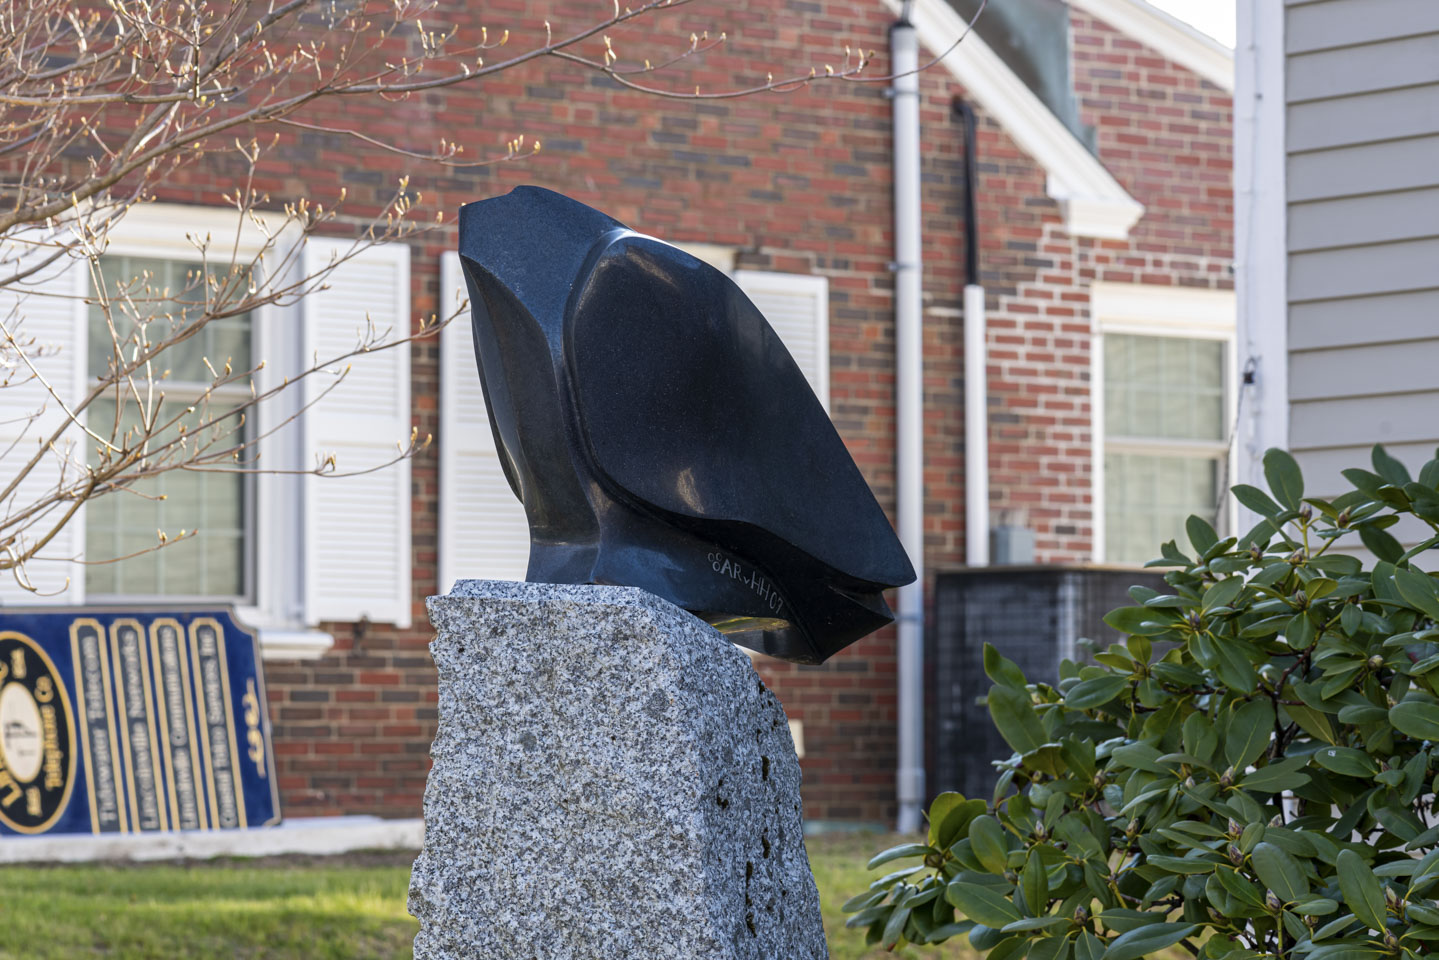 sculpture of black owl